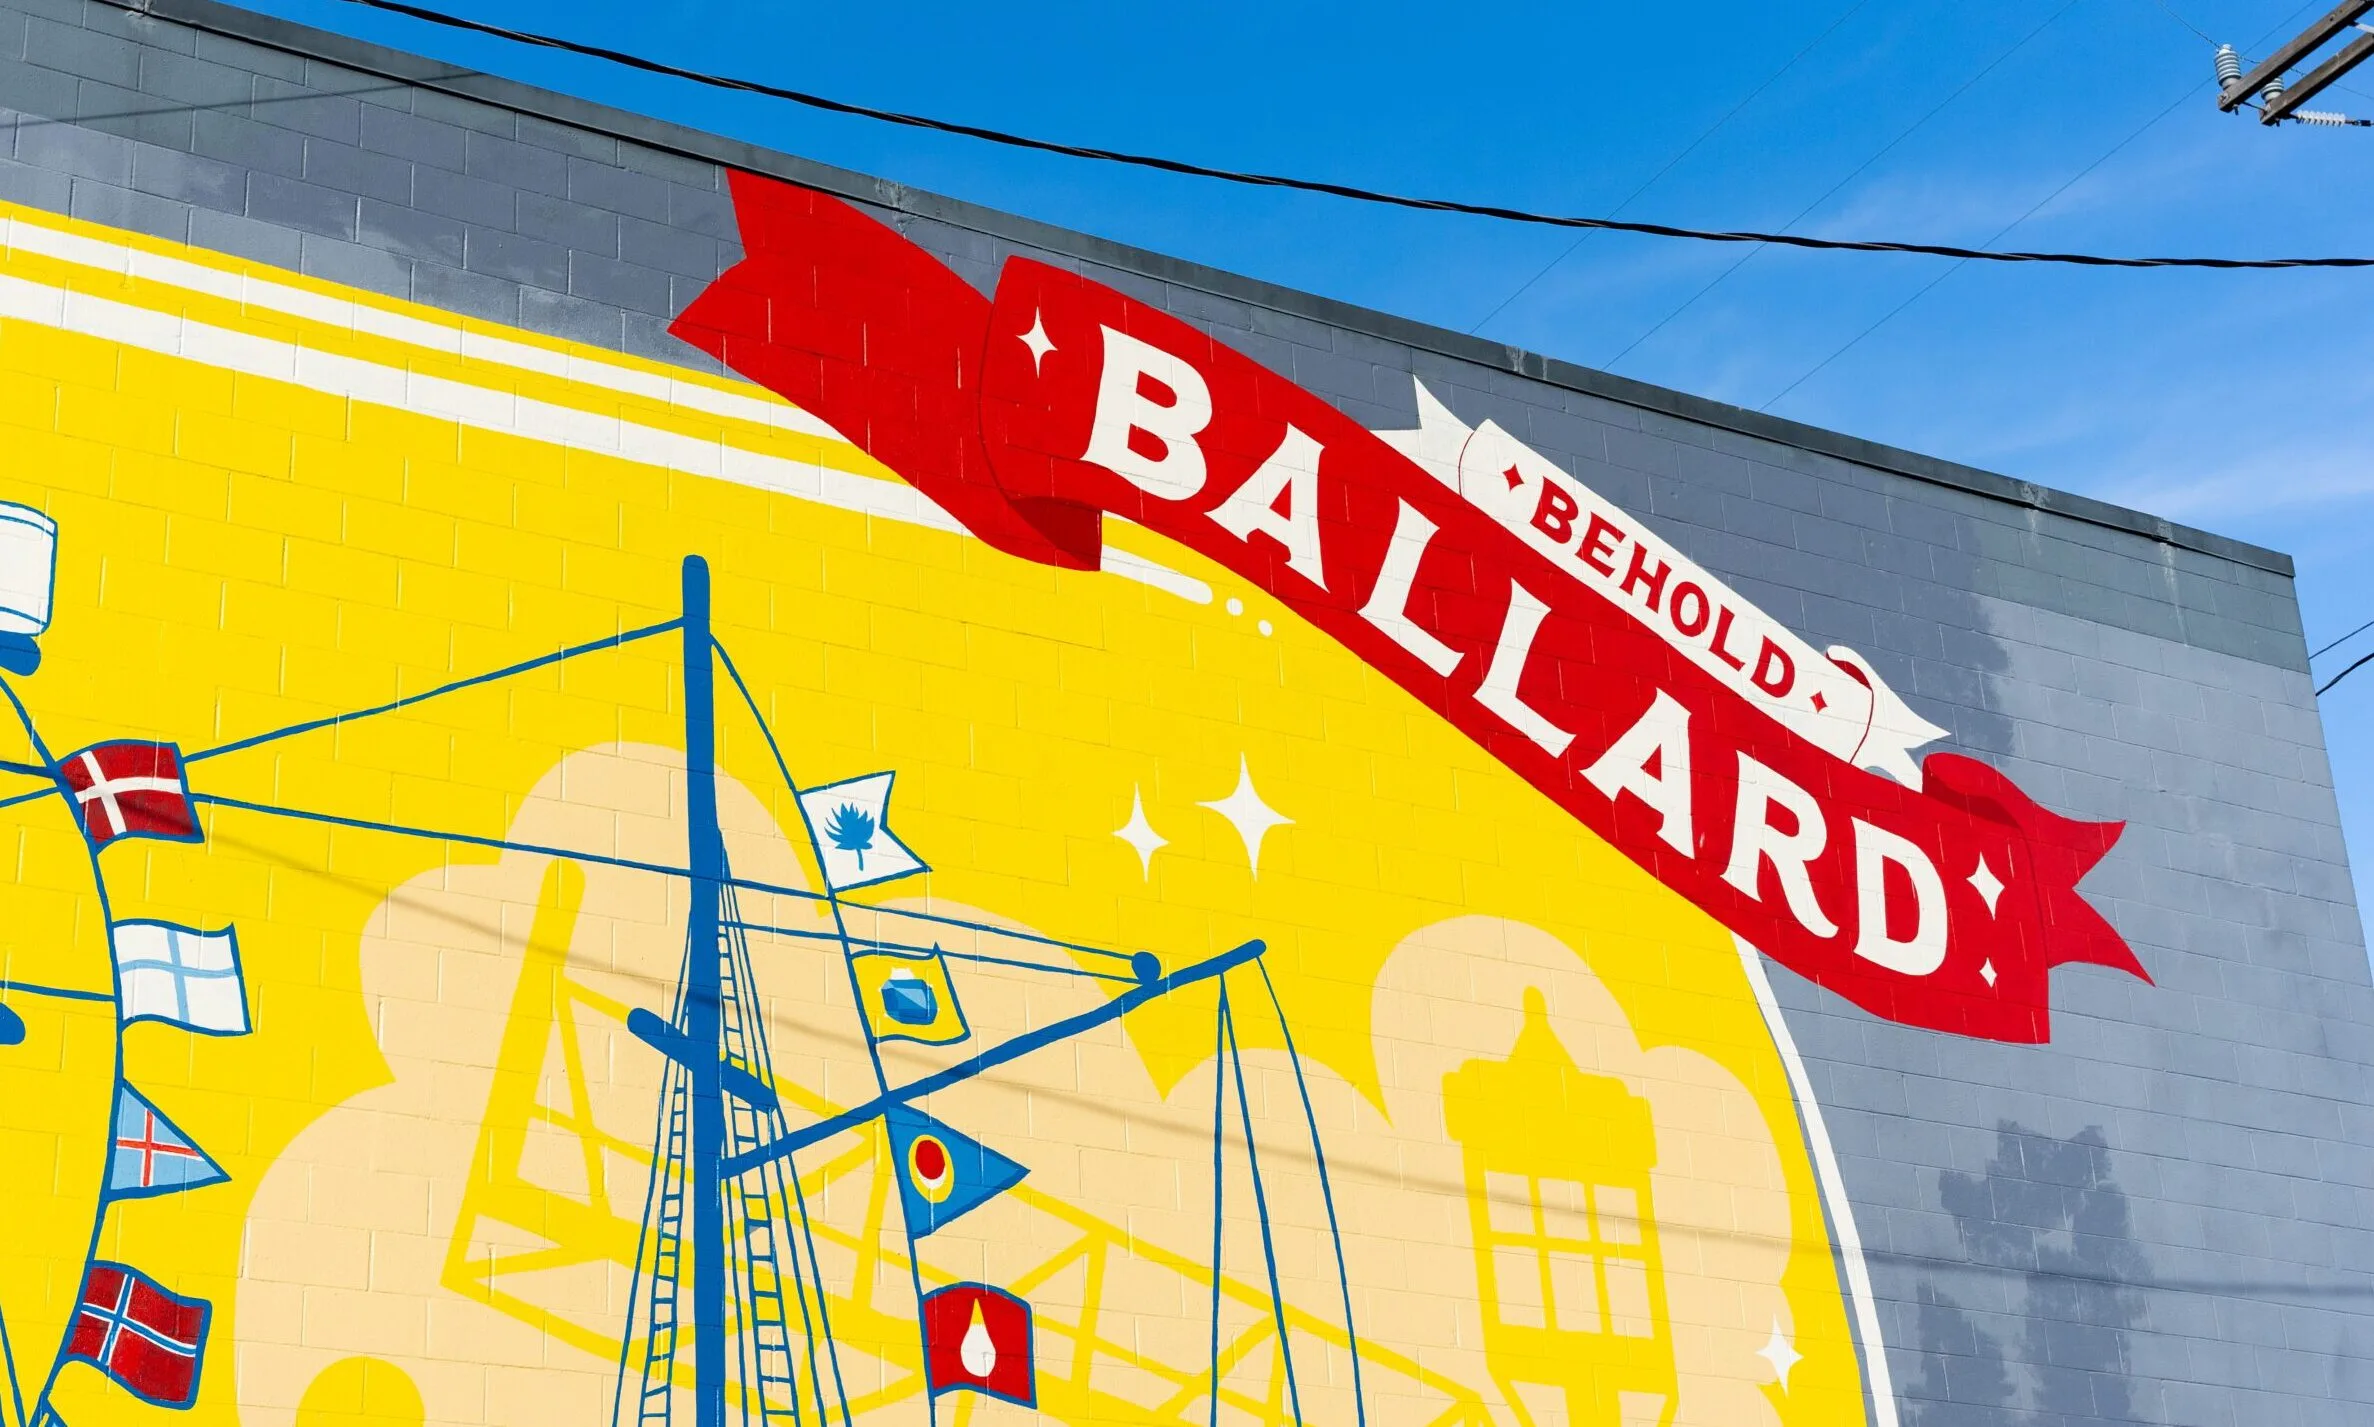 A mural outside Ballard